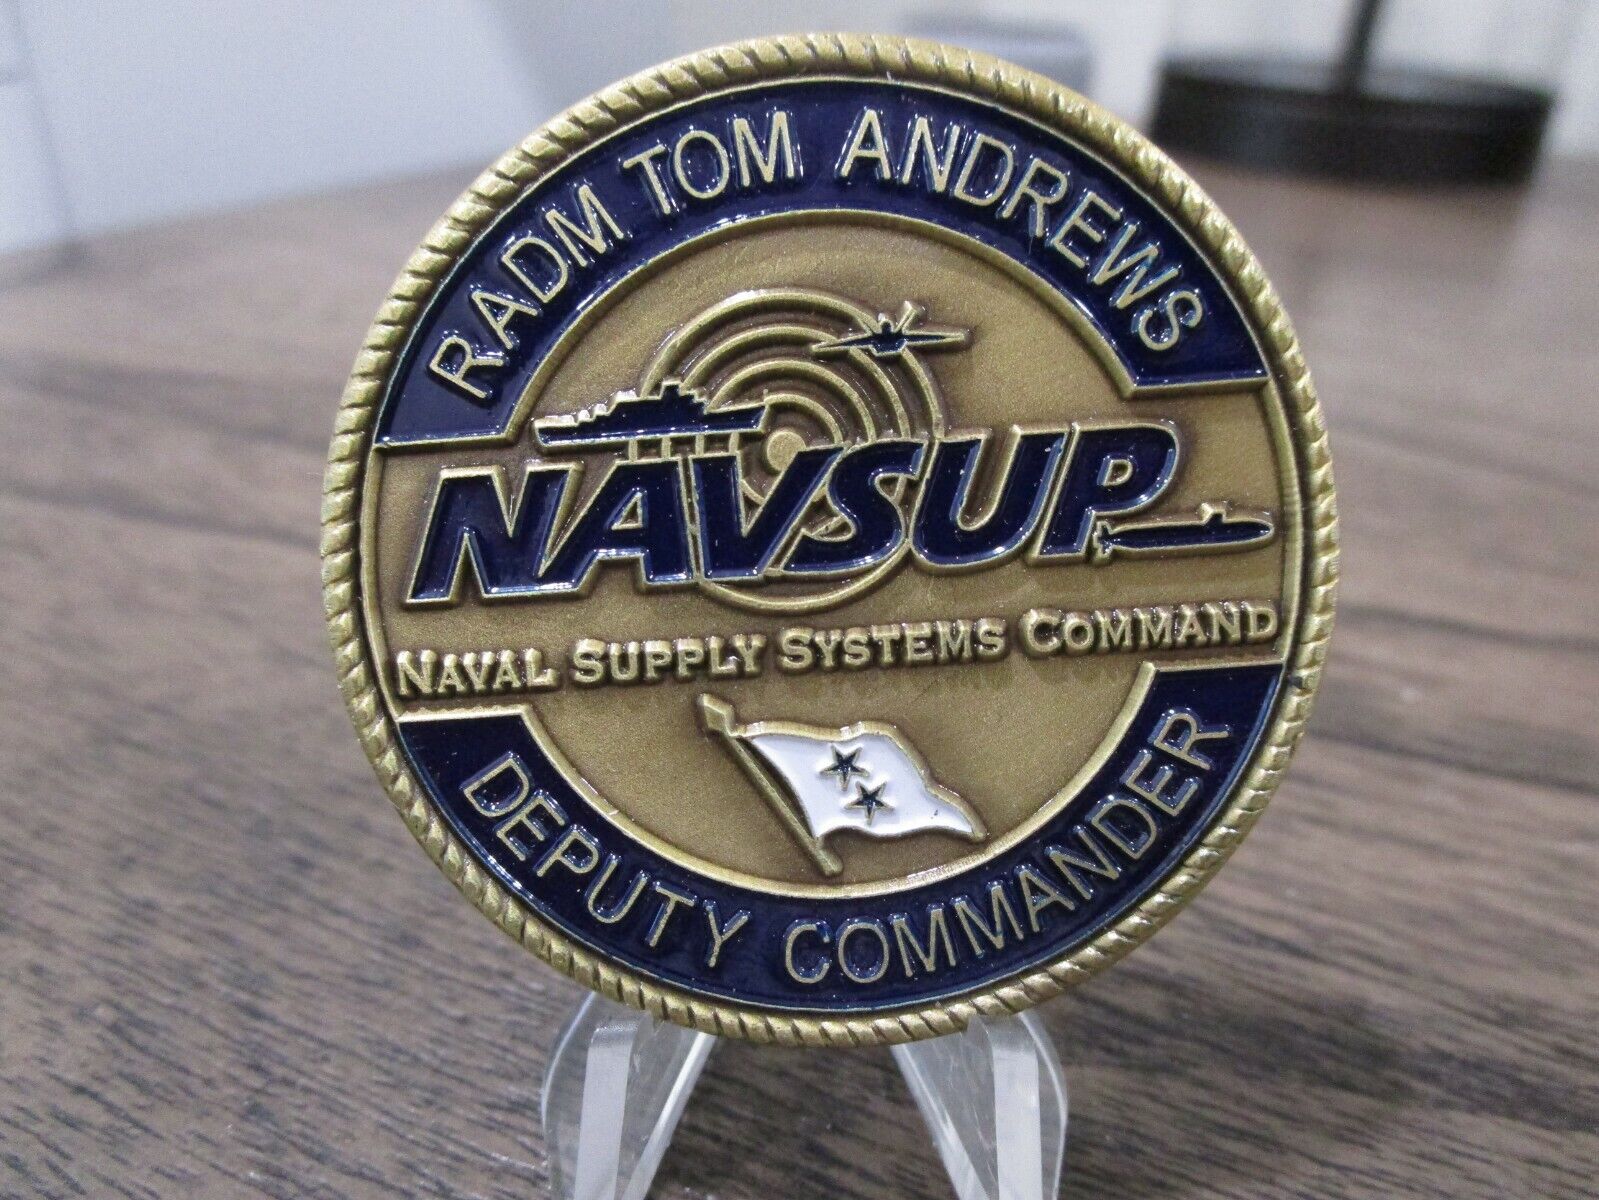 Naval Supply Systems Command NAVSUP RADM Tom Andrews Deputy CMDR Challenge Coin 